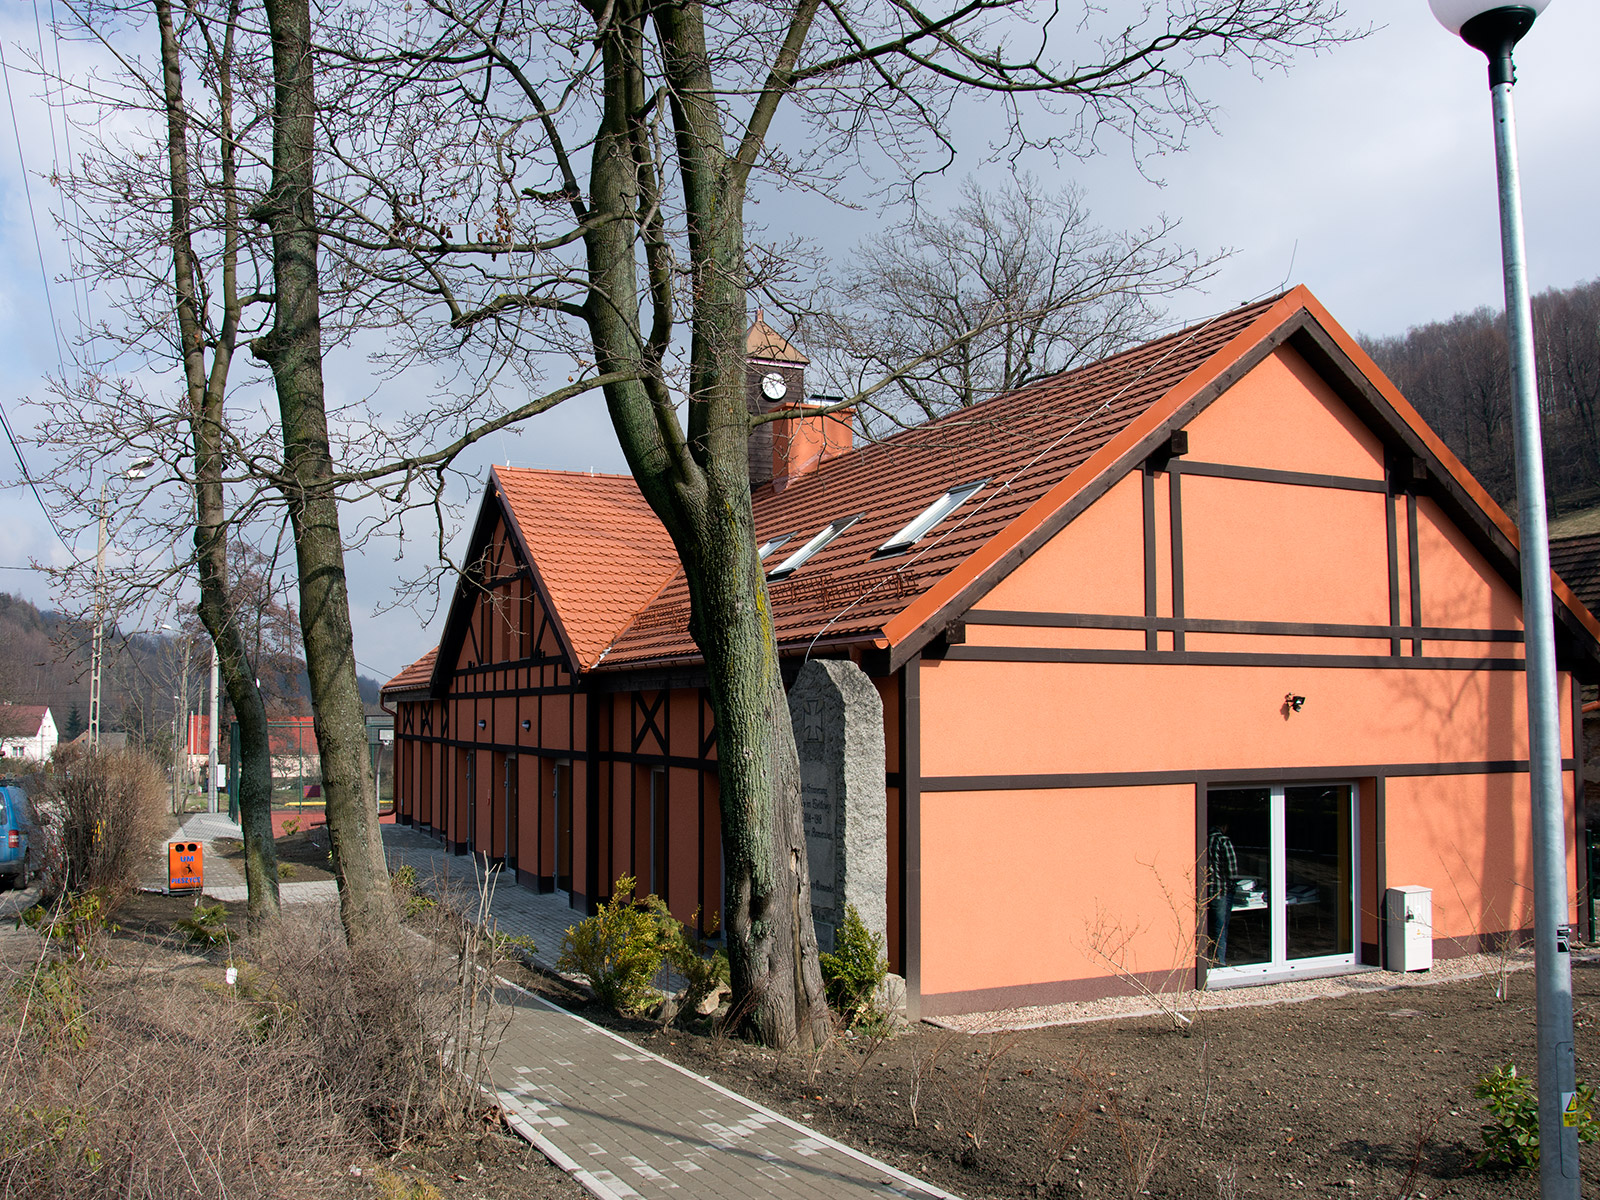 Municipal Public Library branch in Pieszyce